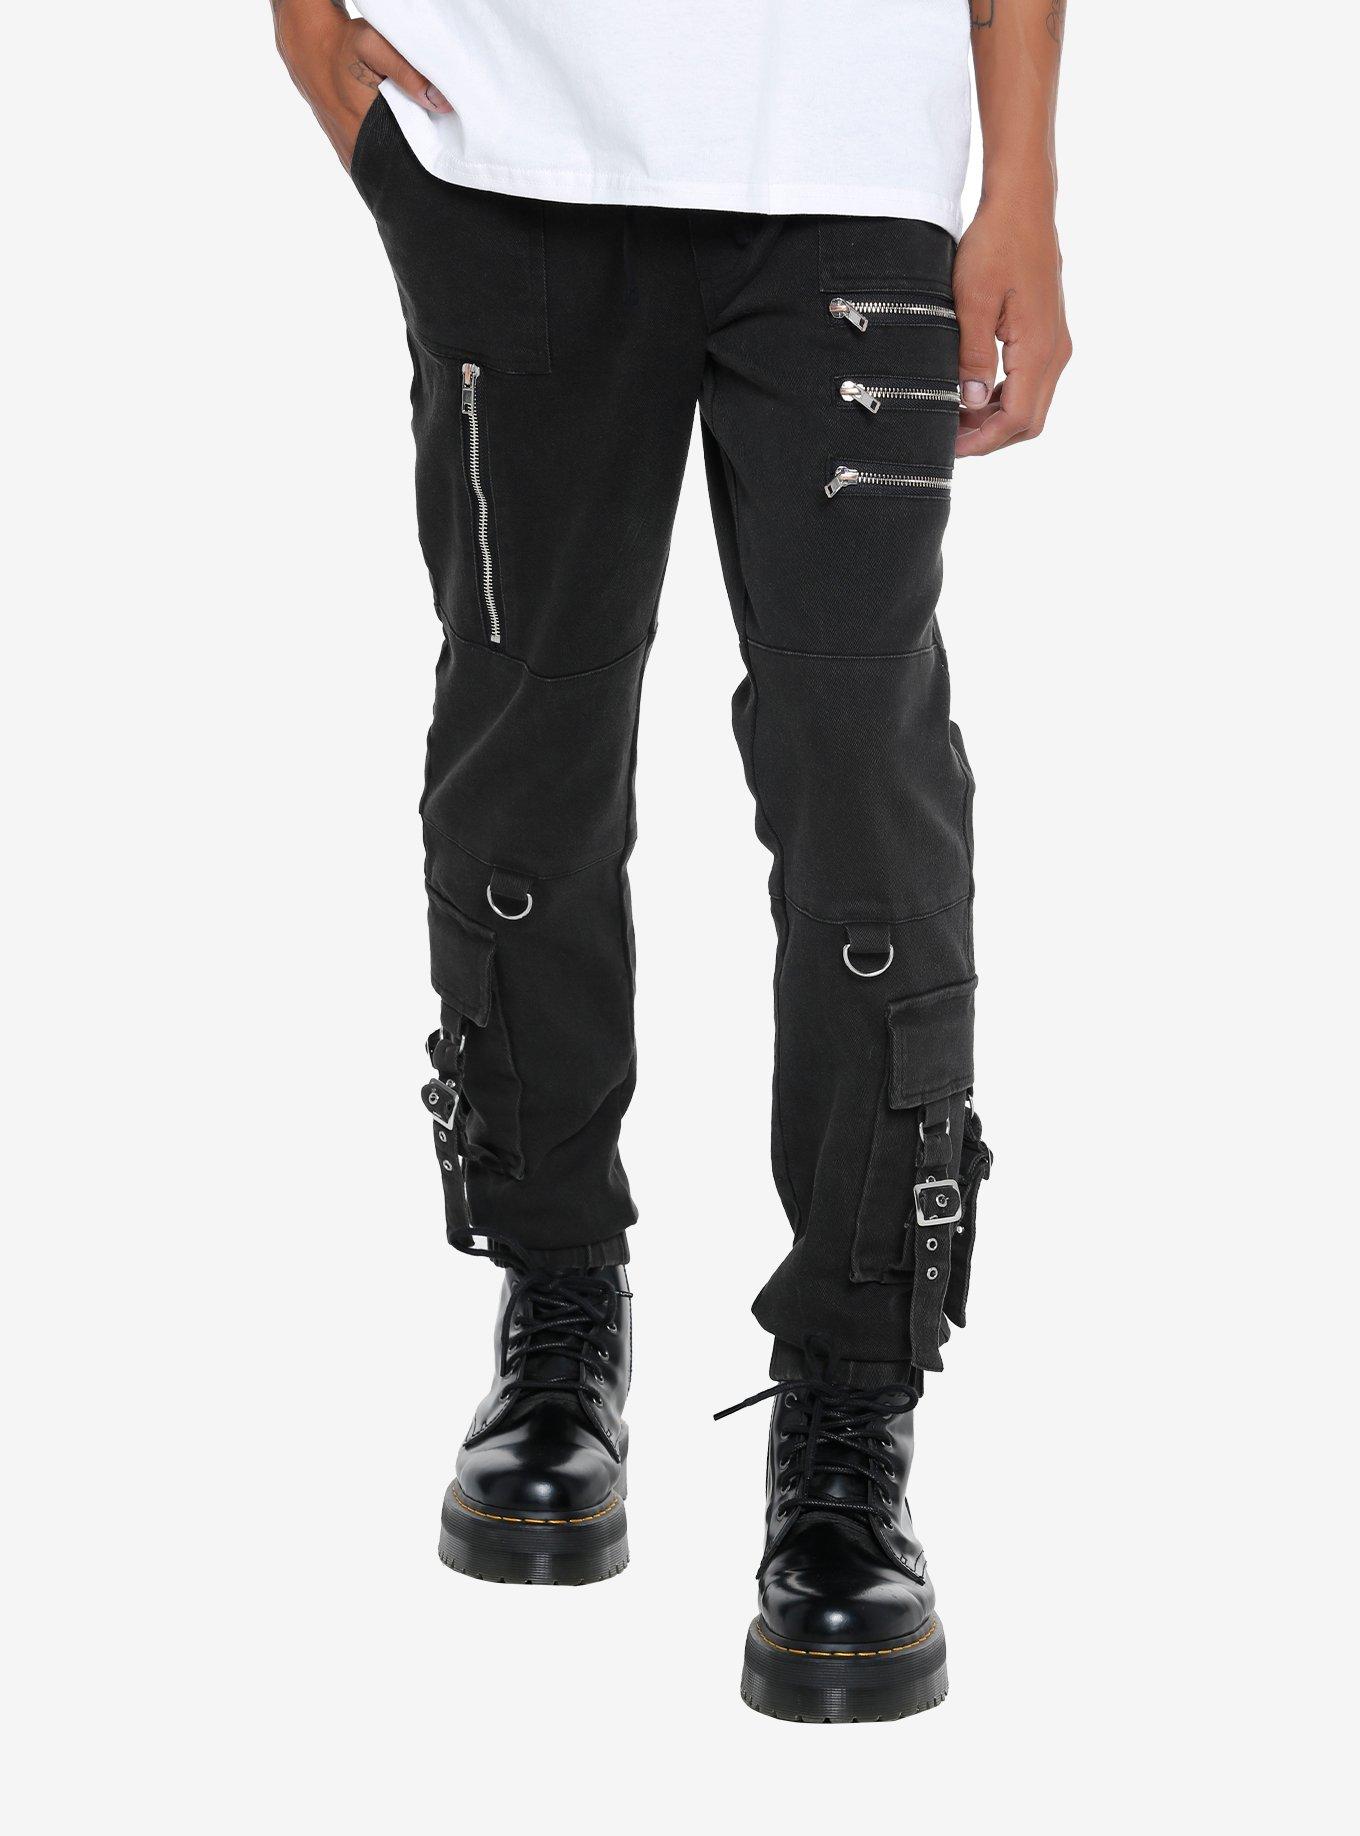 Pants & Jumpsuits, Brand New Black Dragon Fit Joggers Size L